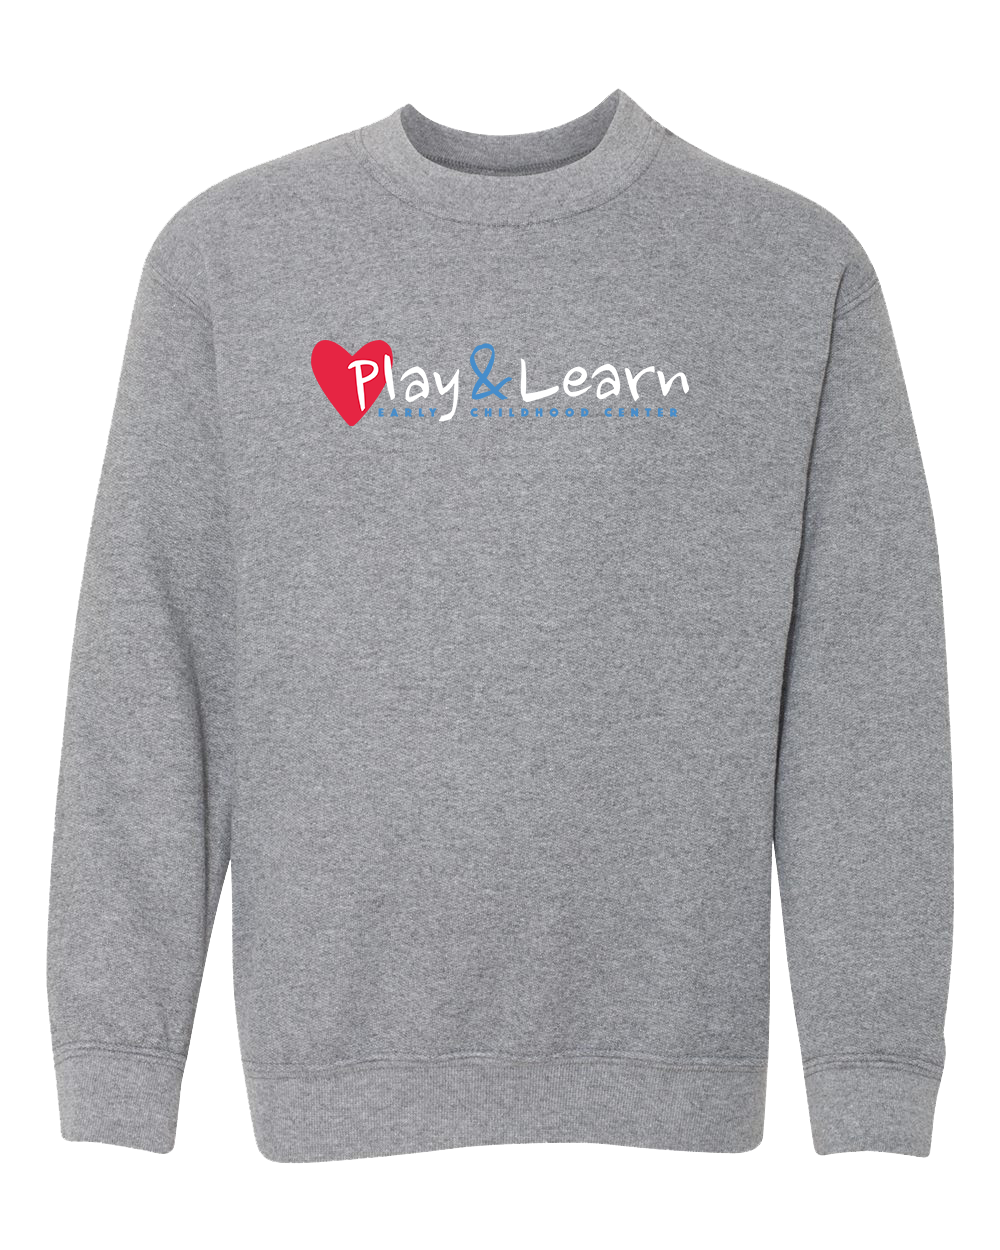 Play & Learn - Heavy Blend Youth Sweatshirt